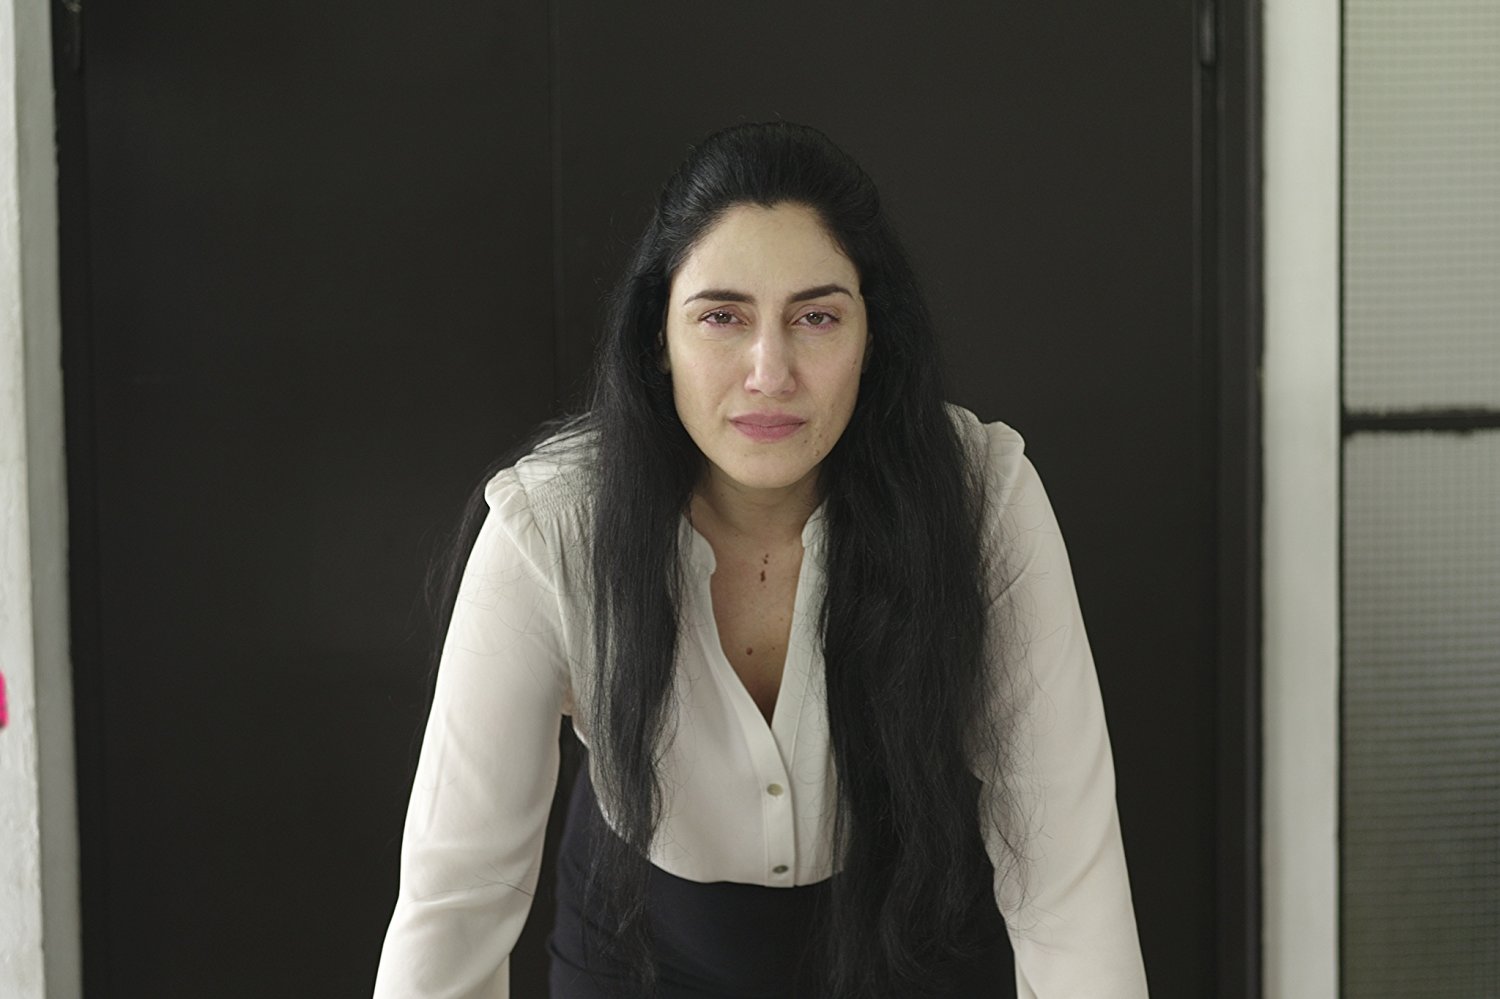 Viviane Amsalem